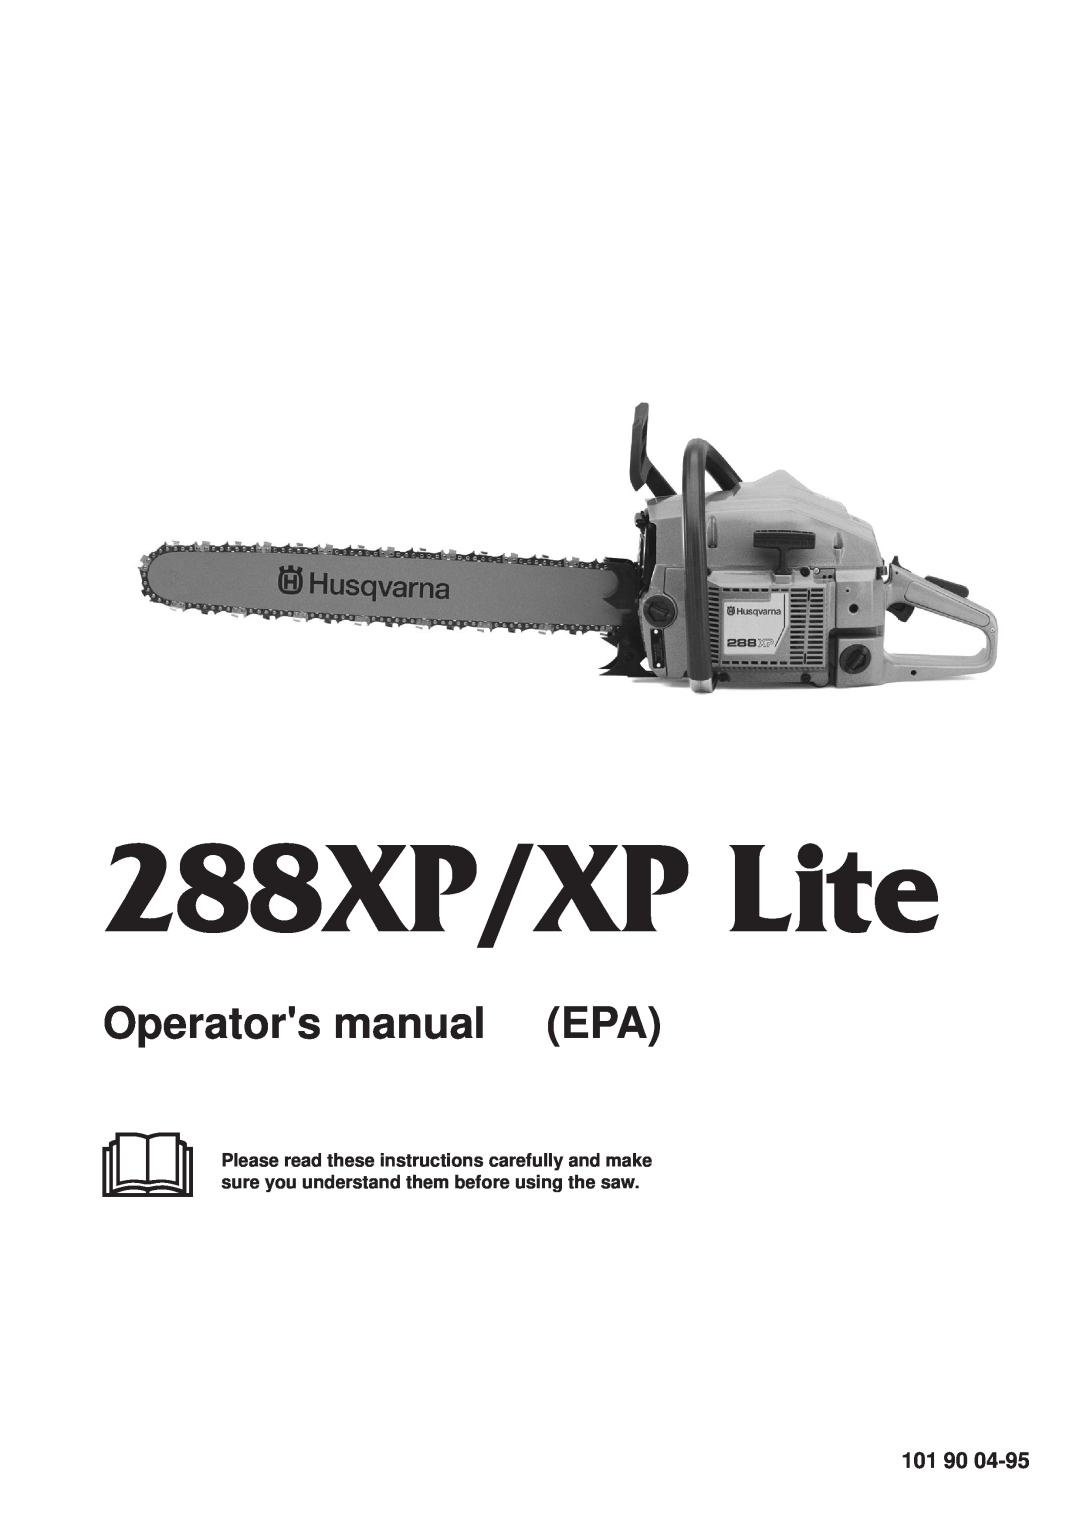 Husqvarna 288XP/XP lite manual 288XP/XP Lite, Operators manual EPA, 101 90 